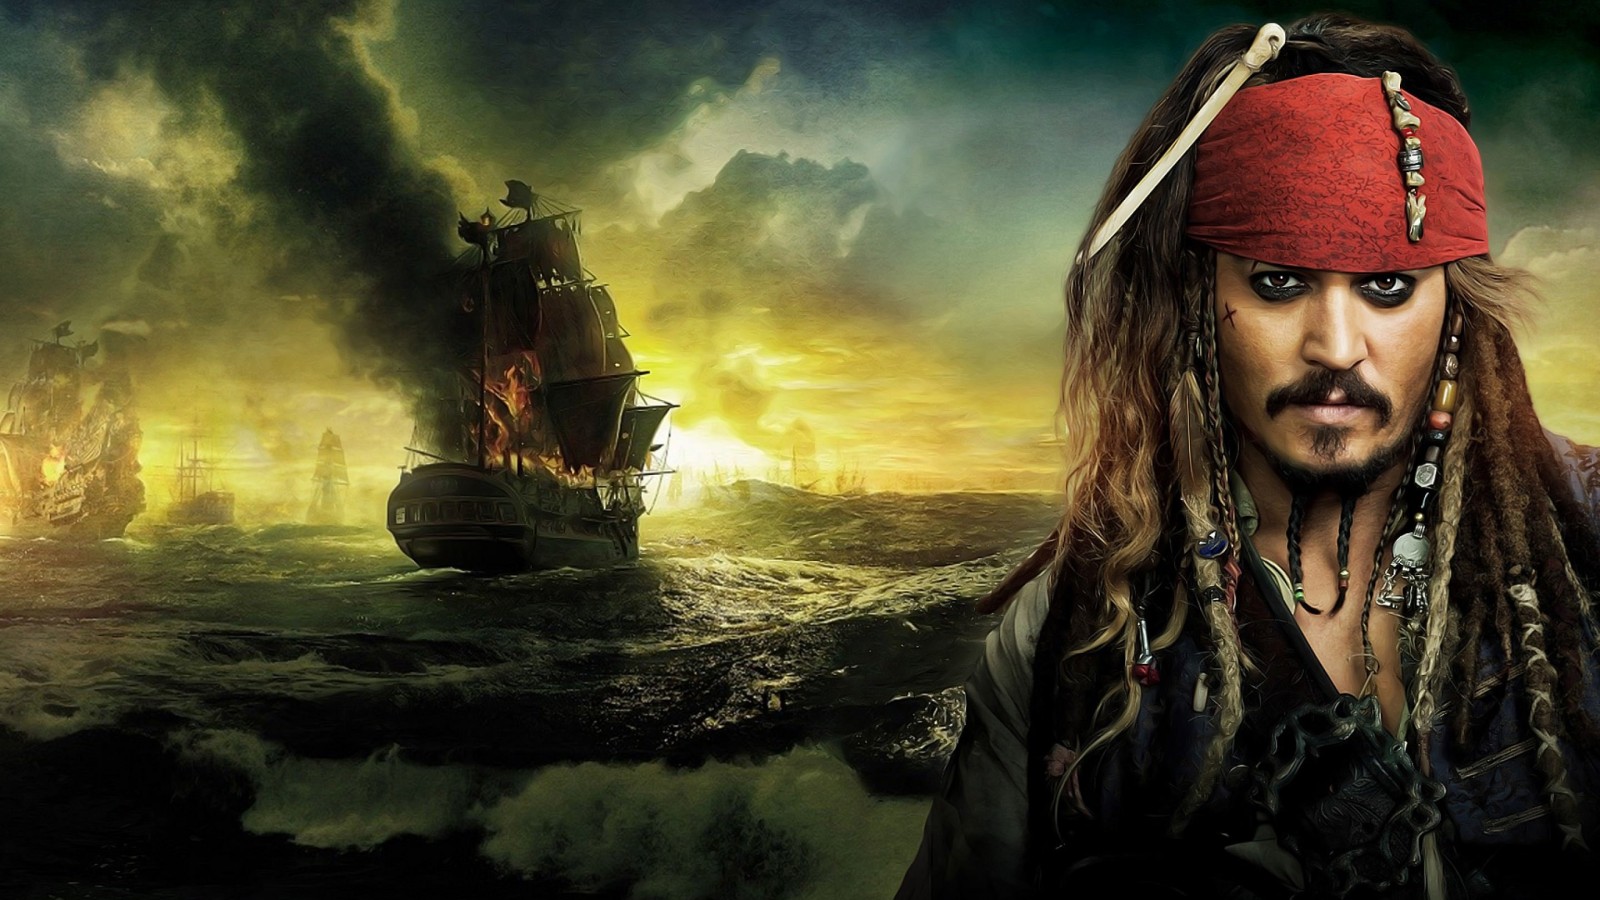 Jack Sparrow - Pirates Of The Caribbean Wallpaper for Desktop 1600x900